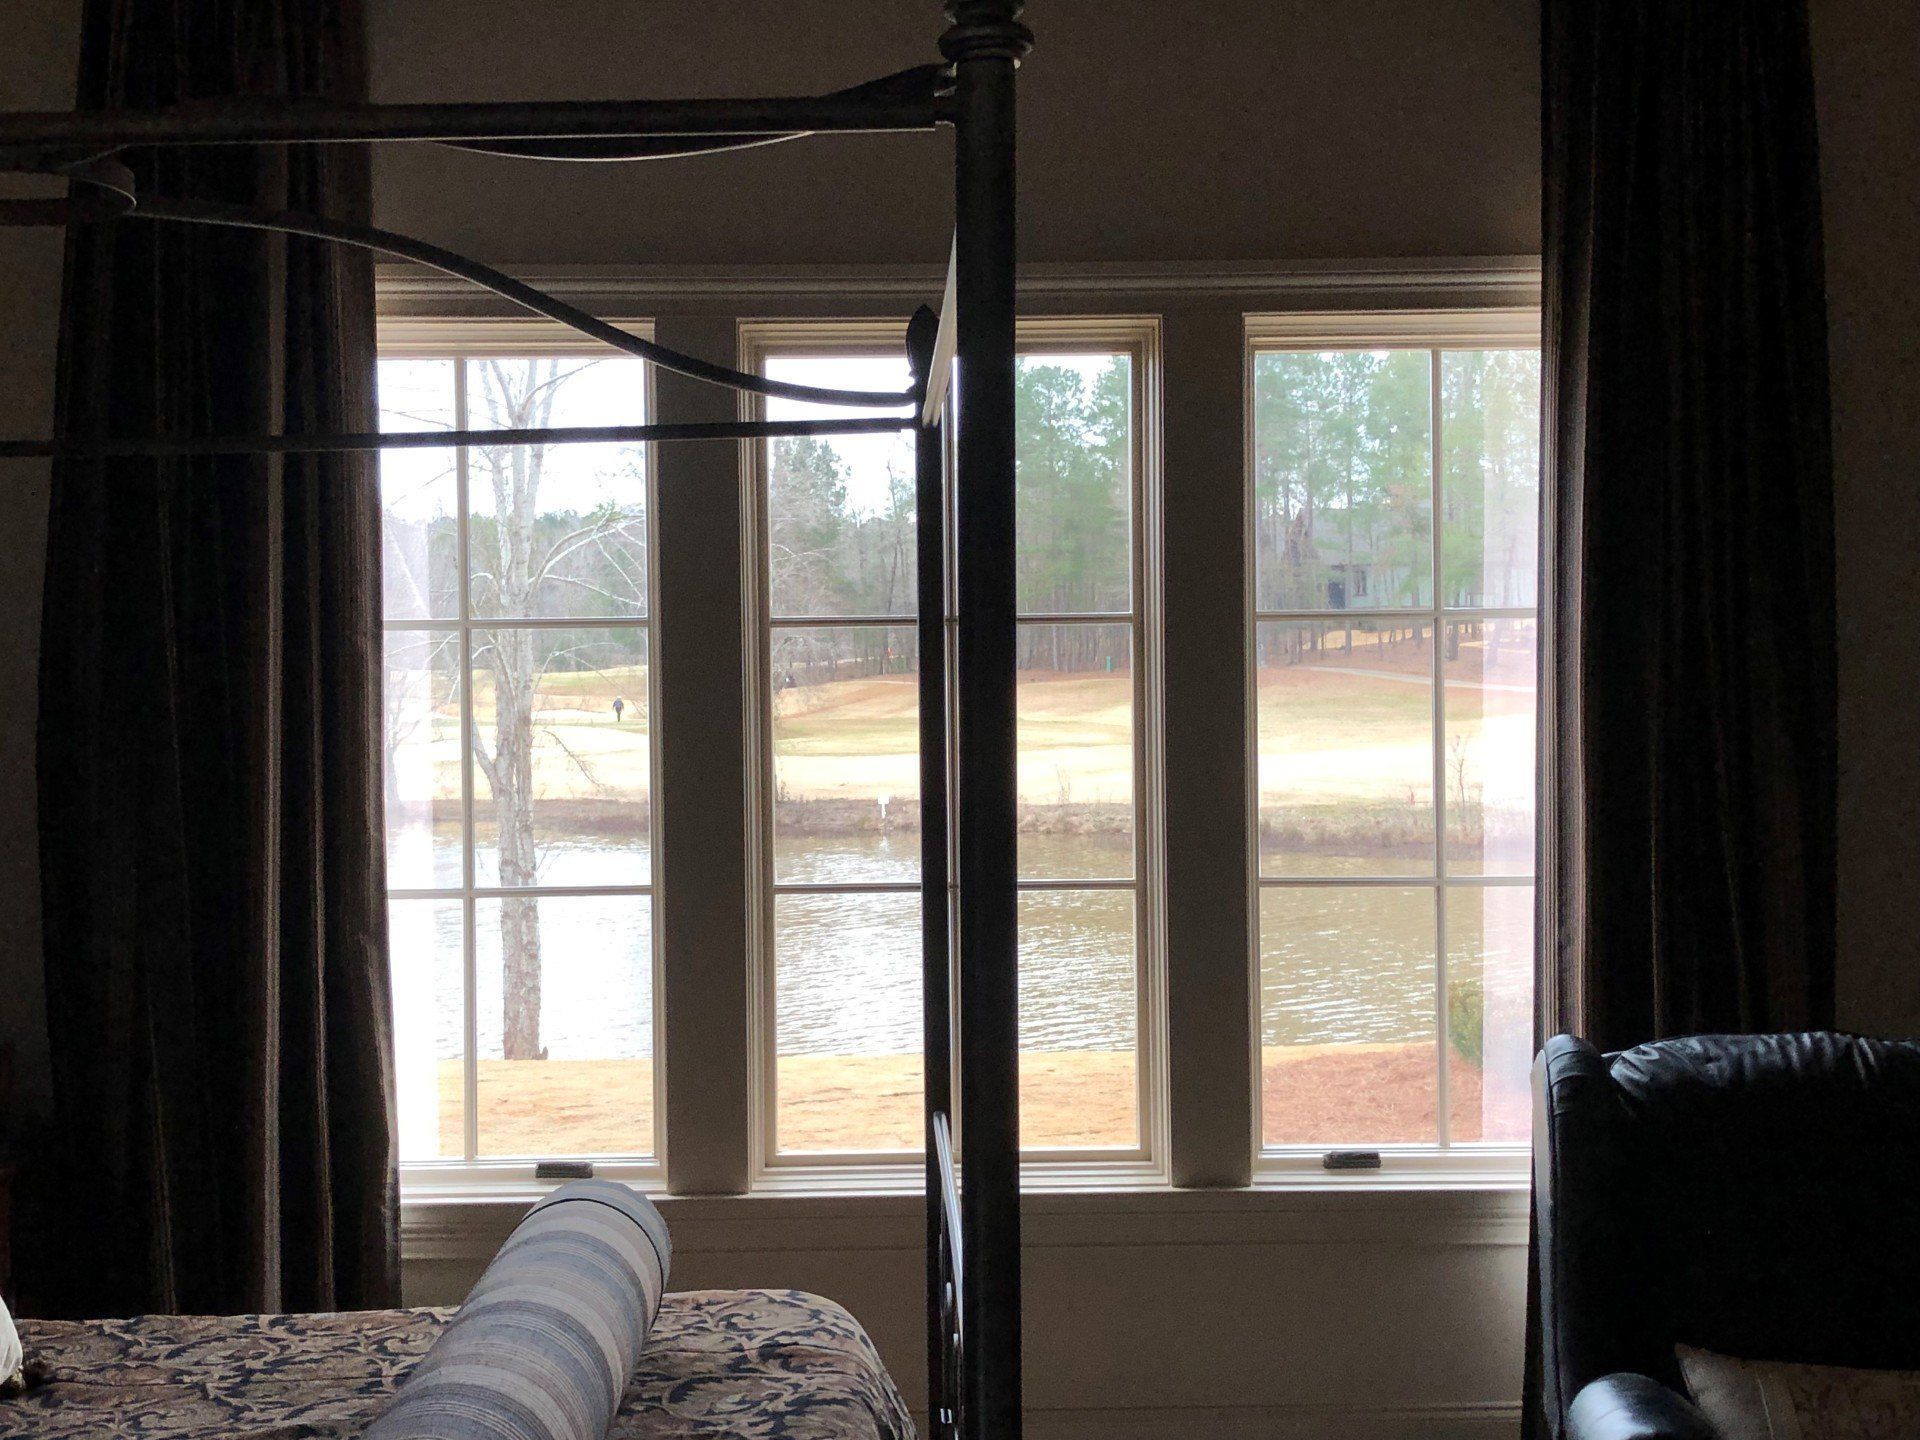 Professionally tinted windows reducing UV glare - home window tint installed on bedroom windows in Auburn, Alabama